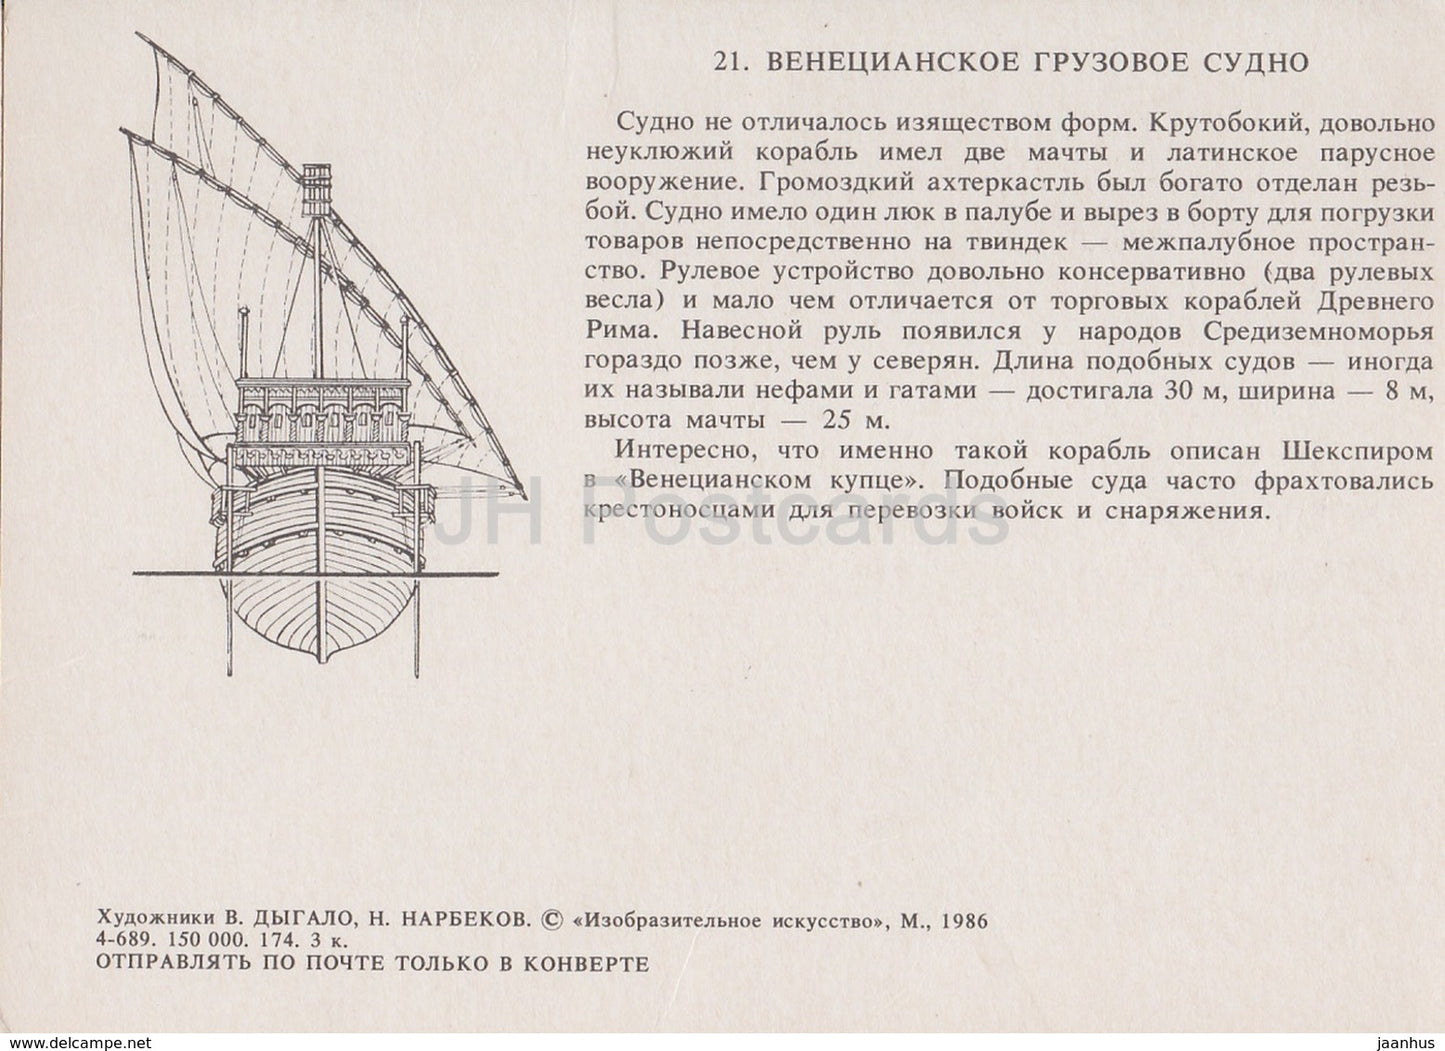 Venetian cargo ship - illustration - 1986 - Russia USSR - unused